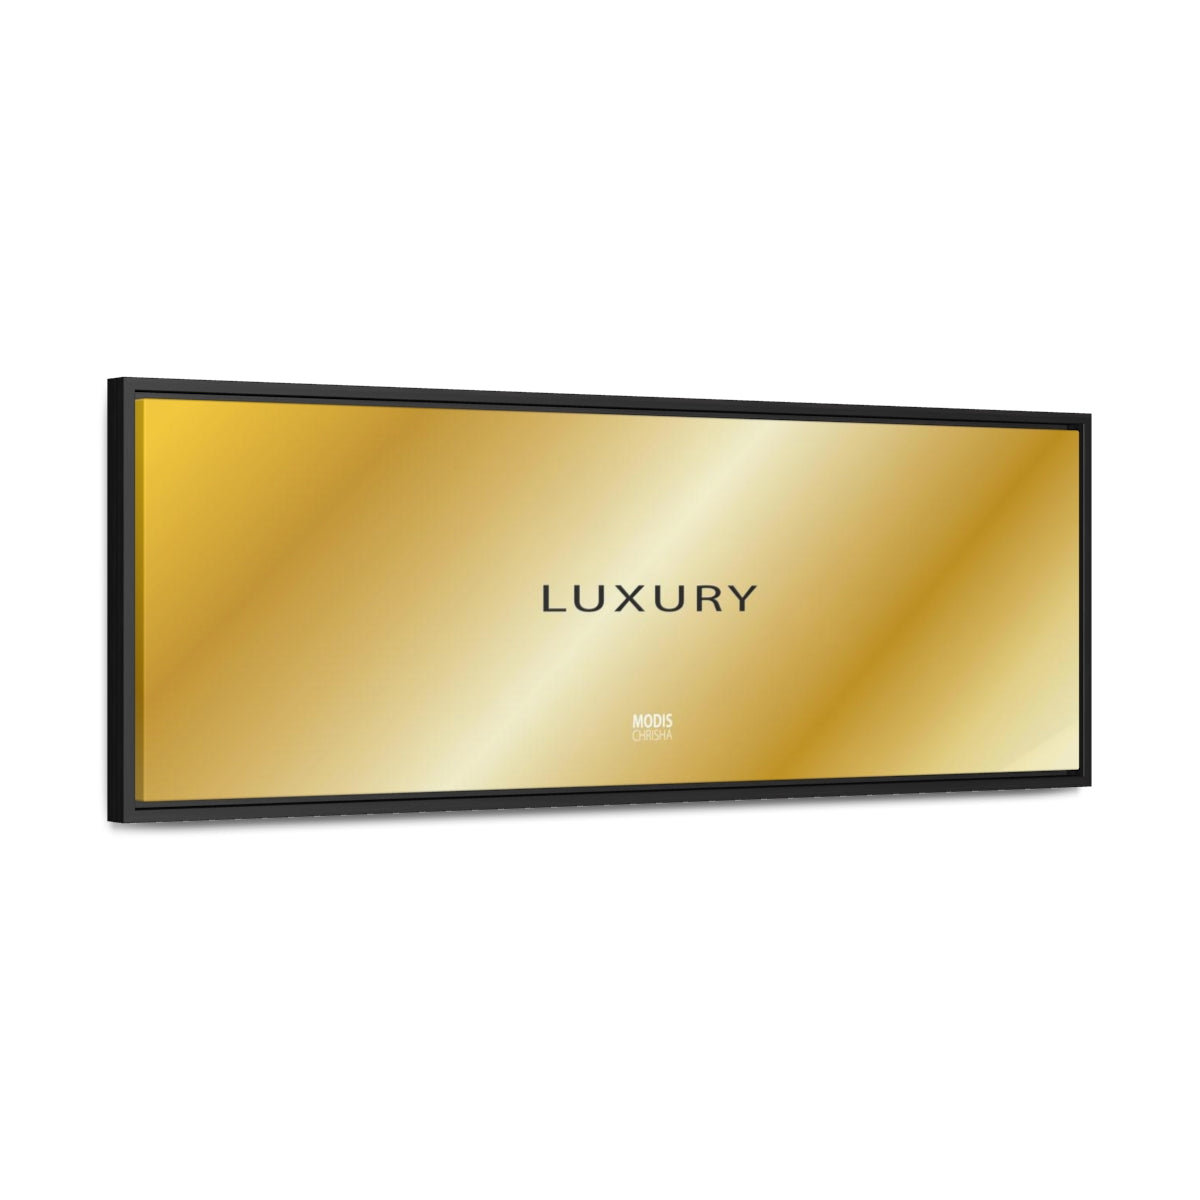 Canvas Gallery Wraps Frame Horizontal 36“ x 12“ - Design Luxury